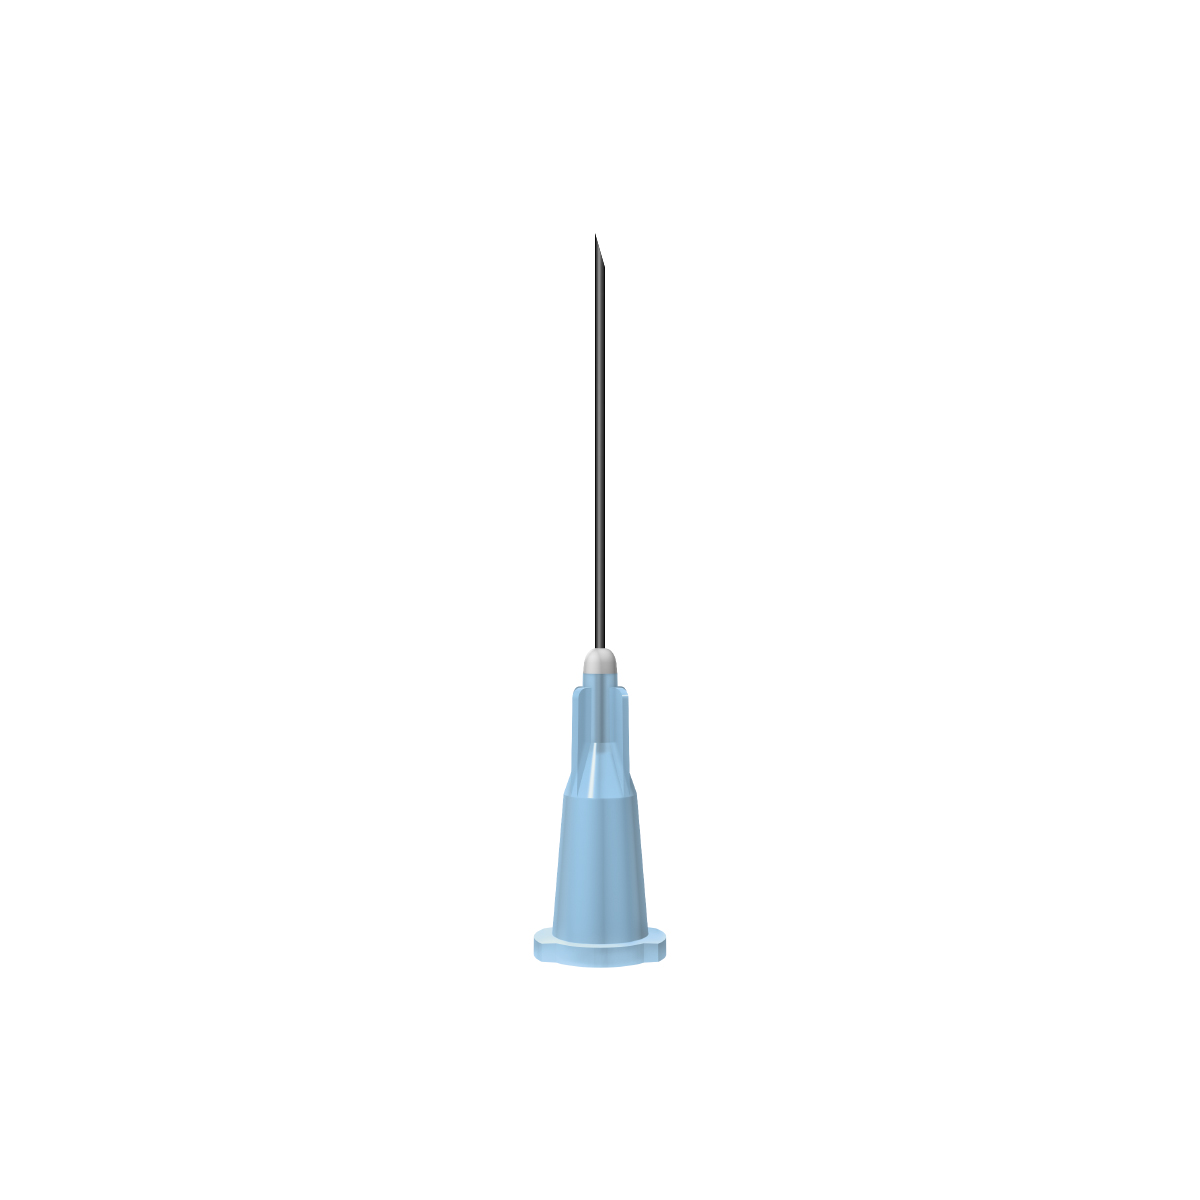 BBraun: Blue 23G 25mm (1 inch) needle 